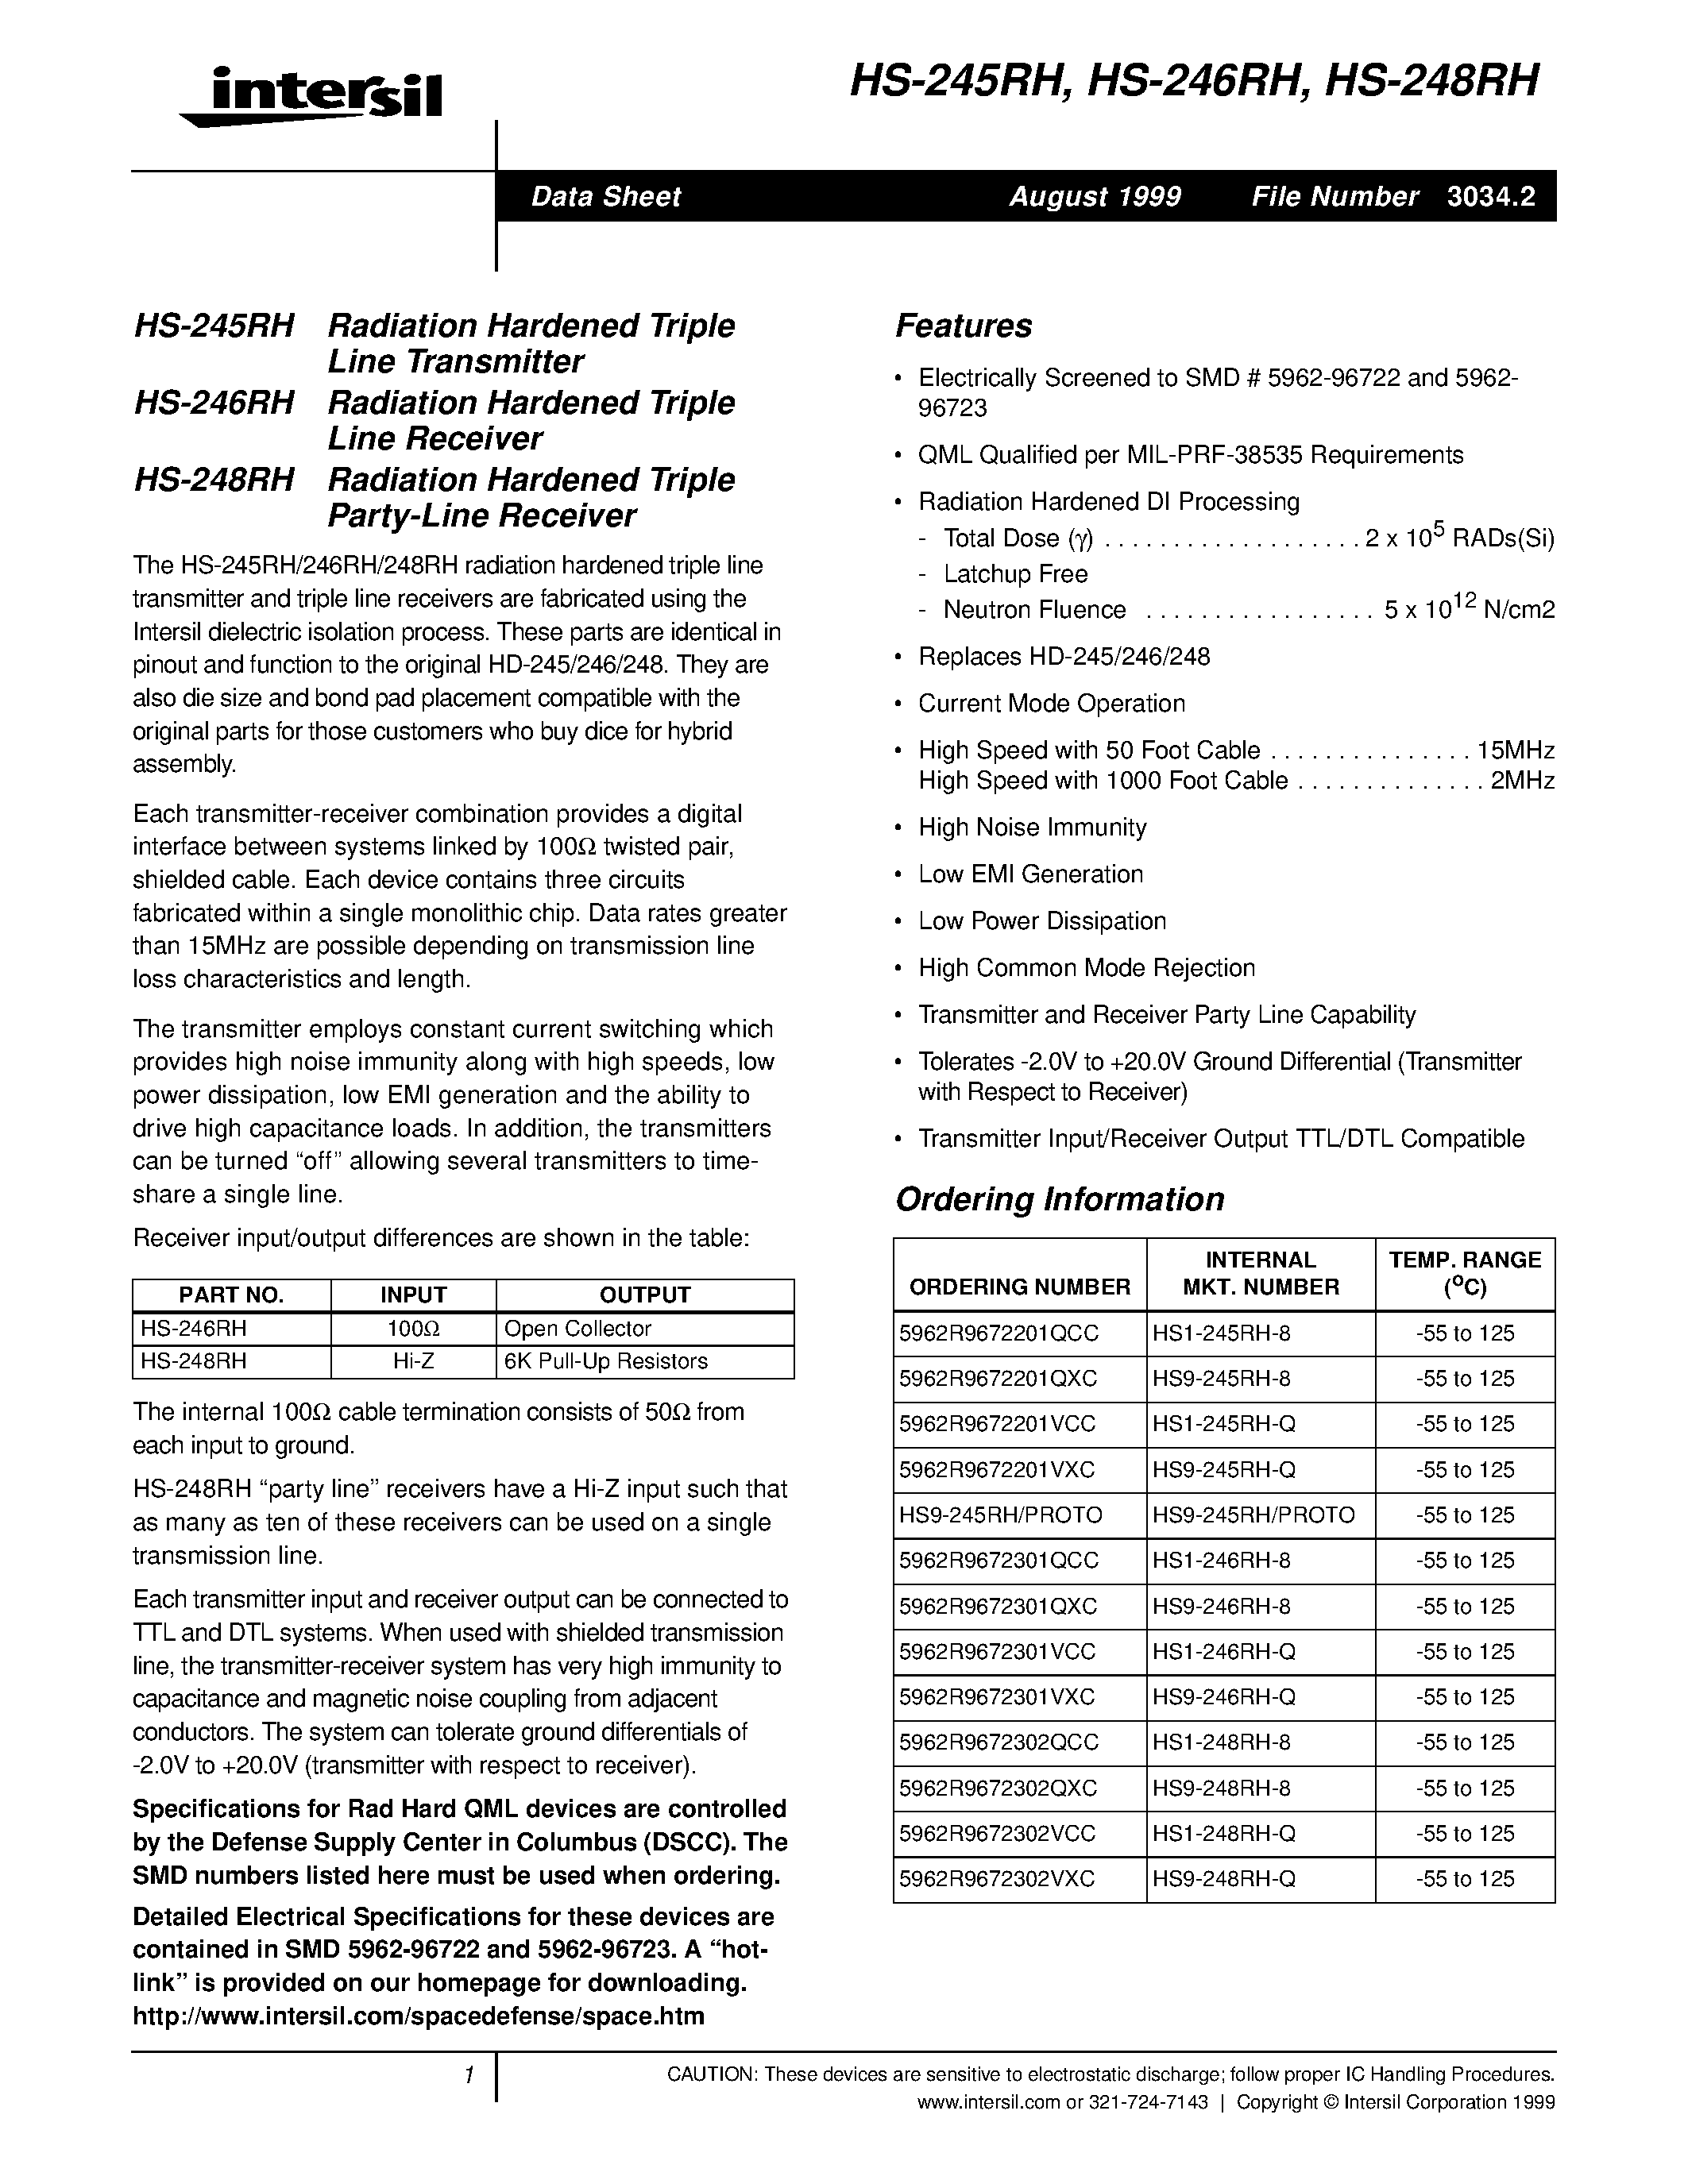 Datasheet HS9-246RH-Q - Radiation Hardened Triple Line(party-Line) Transmitter page 1